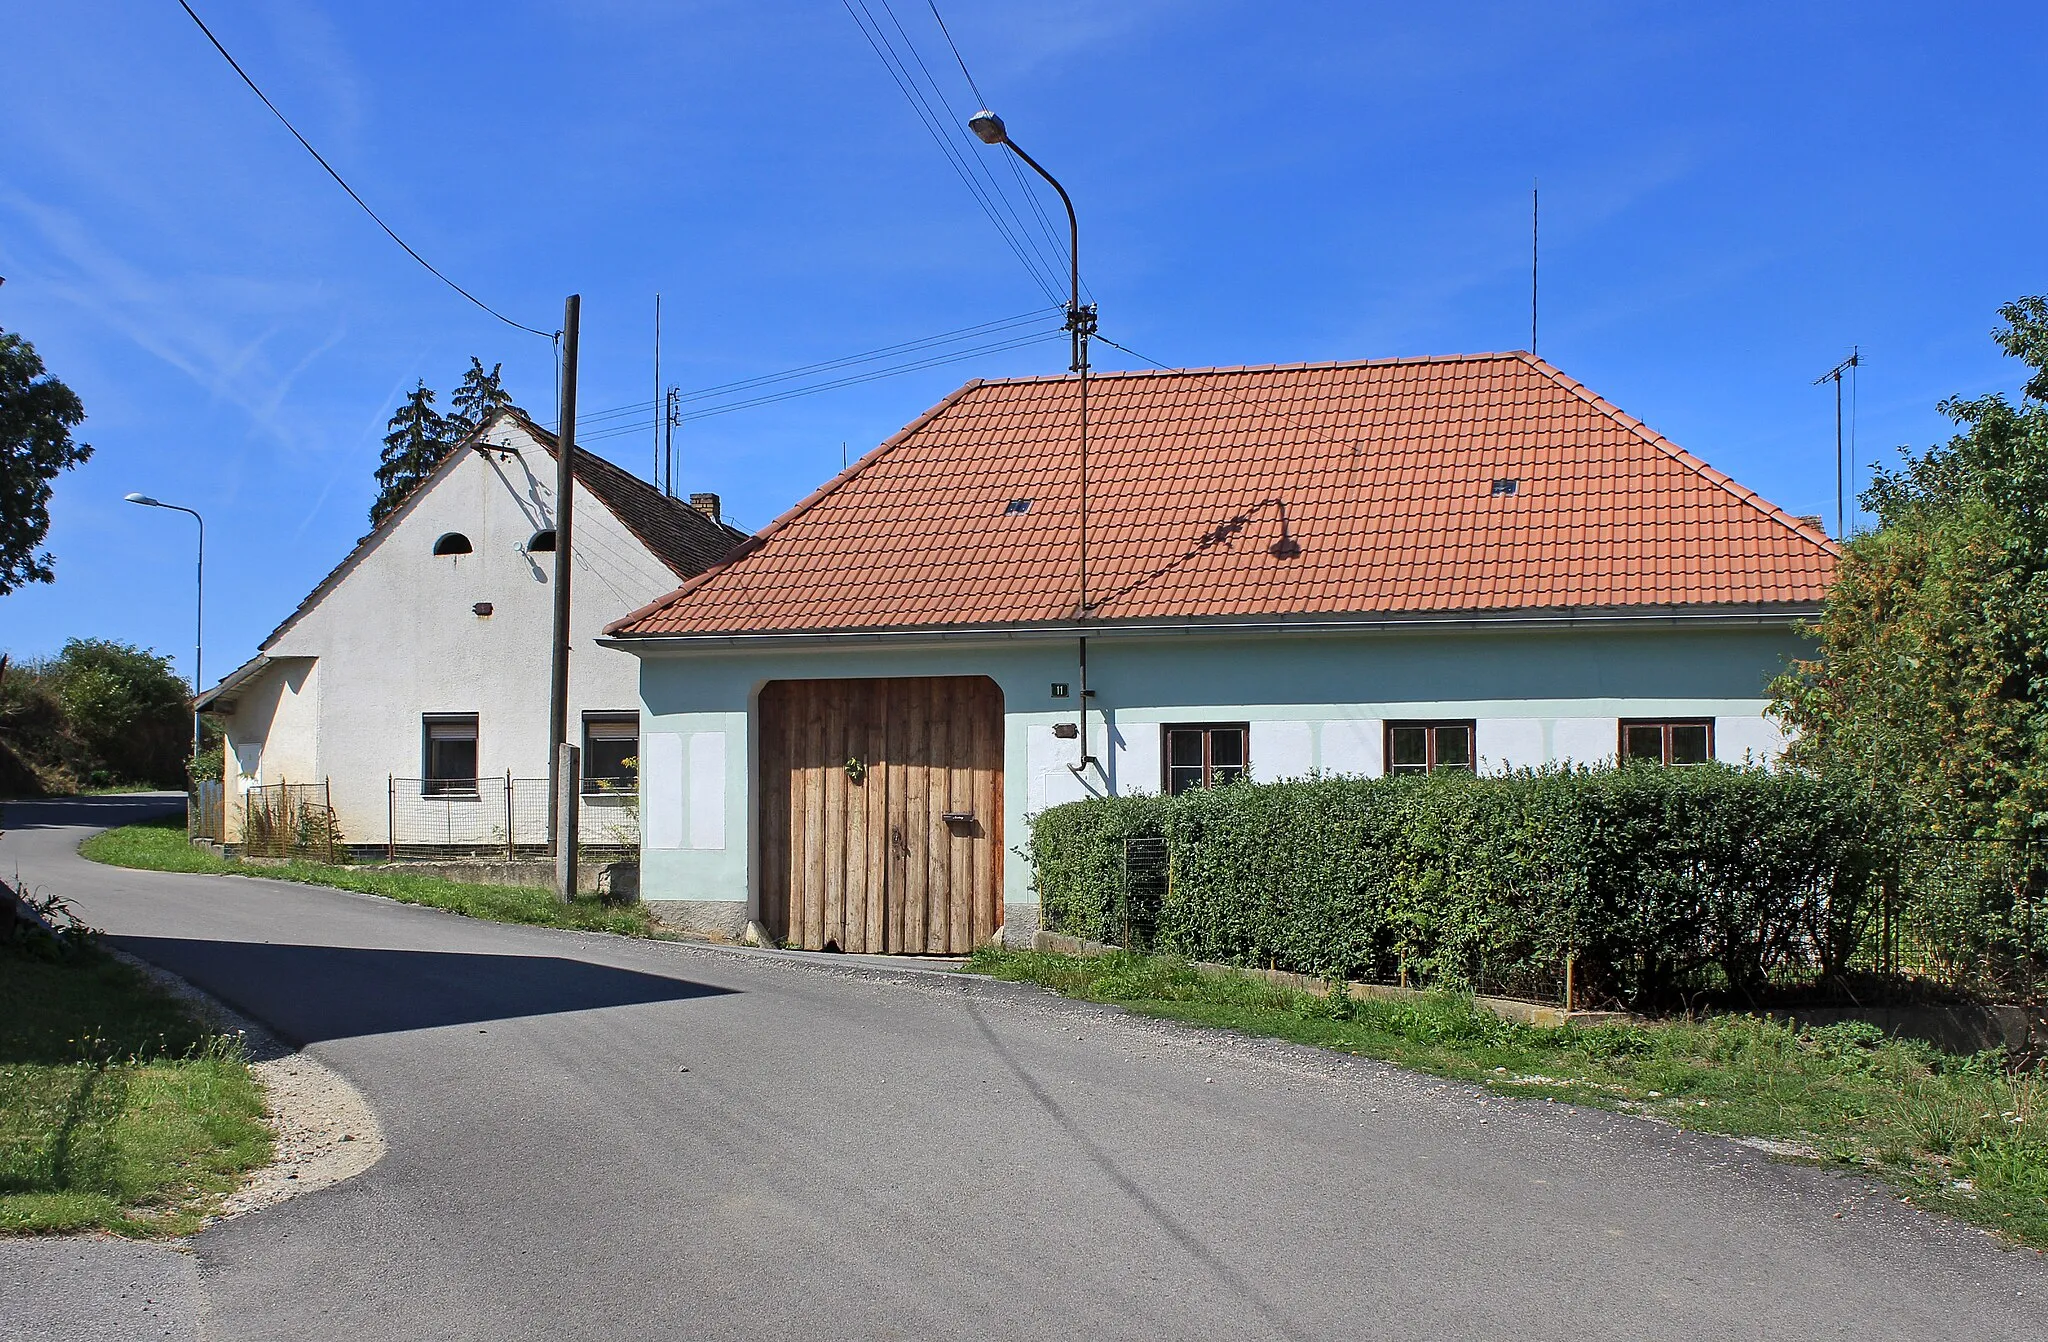 Photo showing: House No 11 in Dobrohošť, Czech Republic.